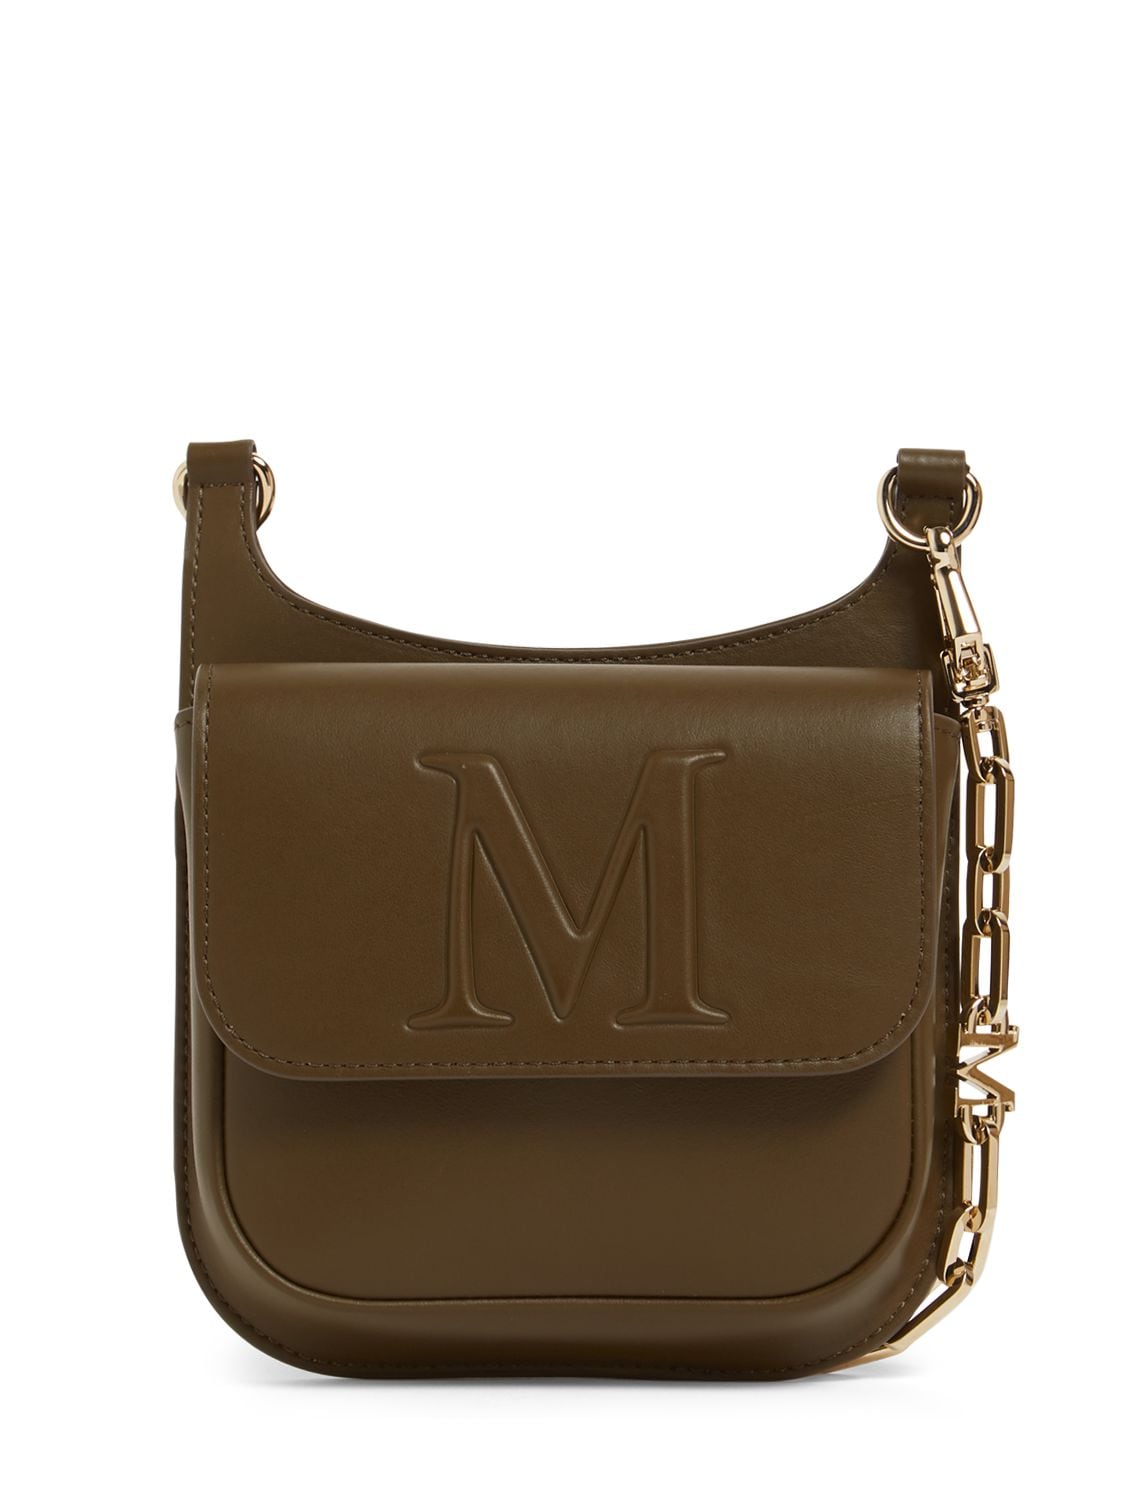 MAX MARA New Mym Leather Shoulder Bag